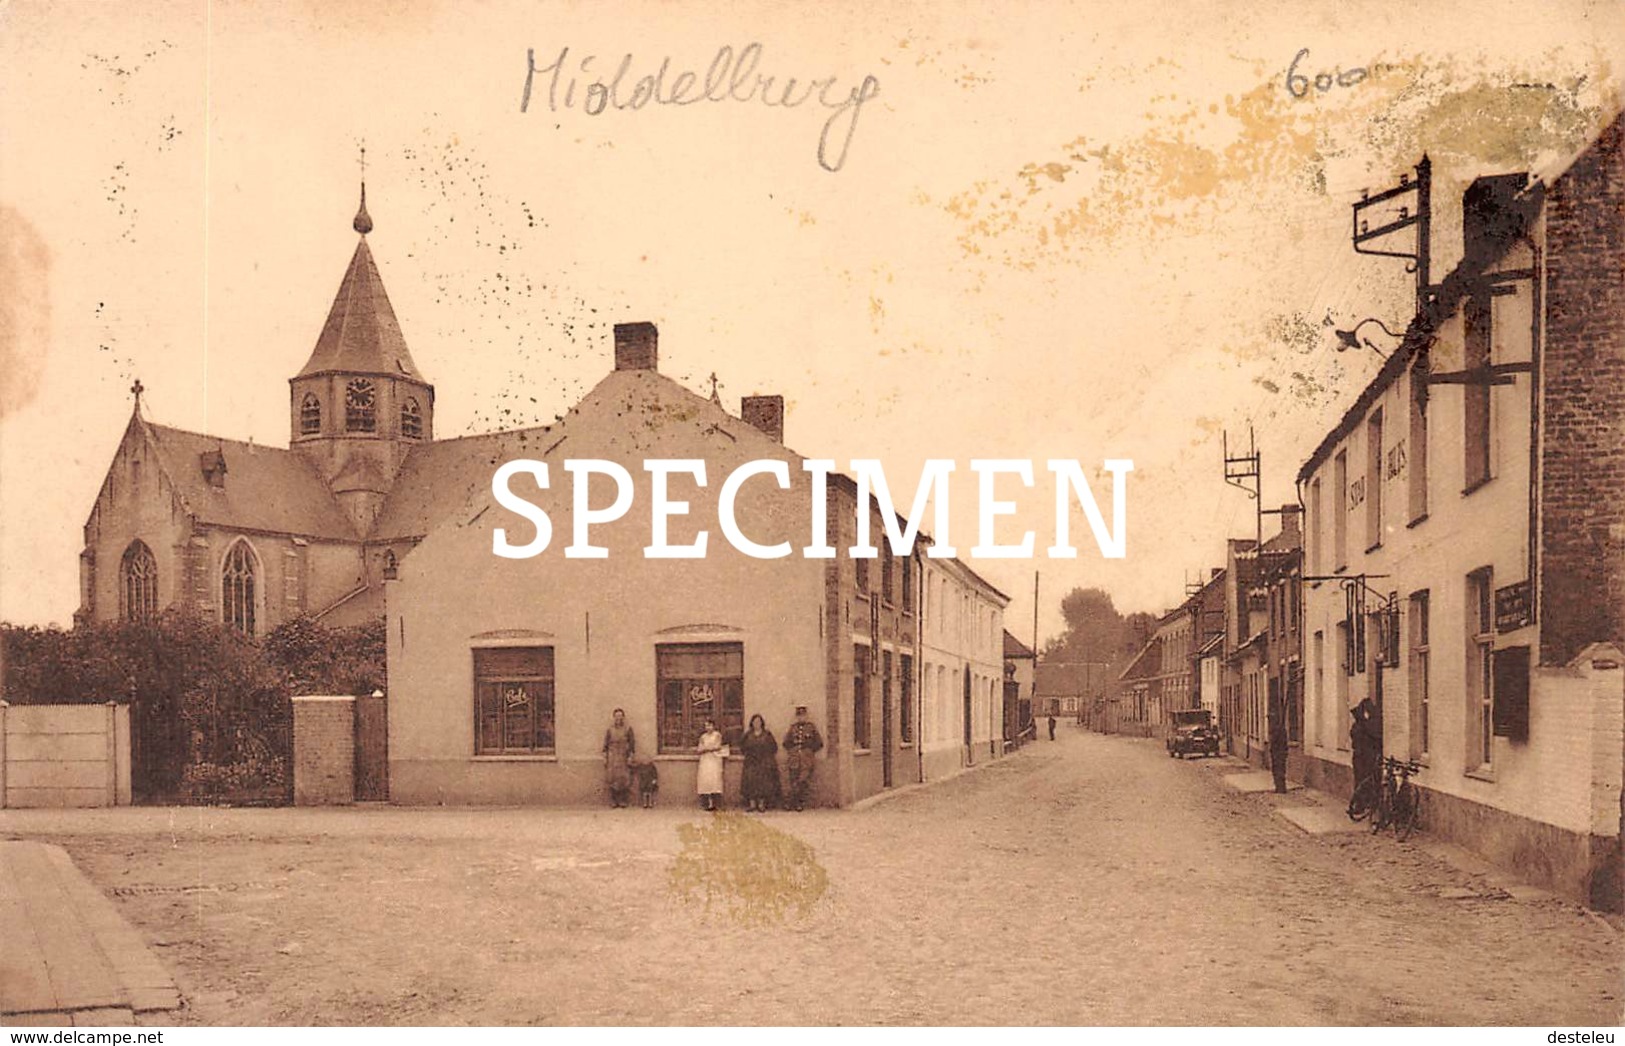 Kerkstraat - Middelburg - Maldegem